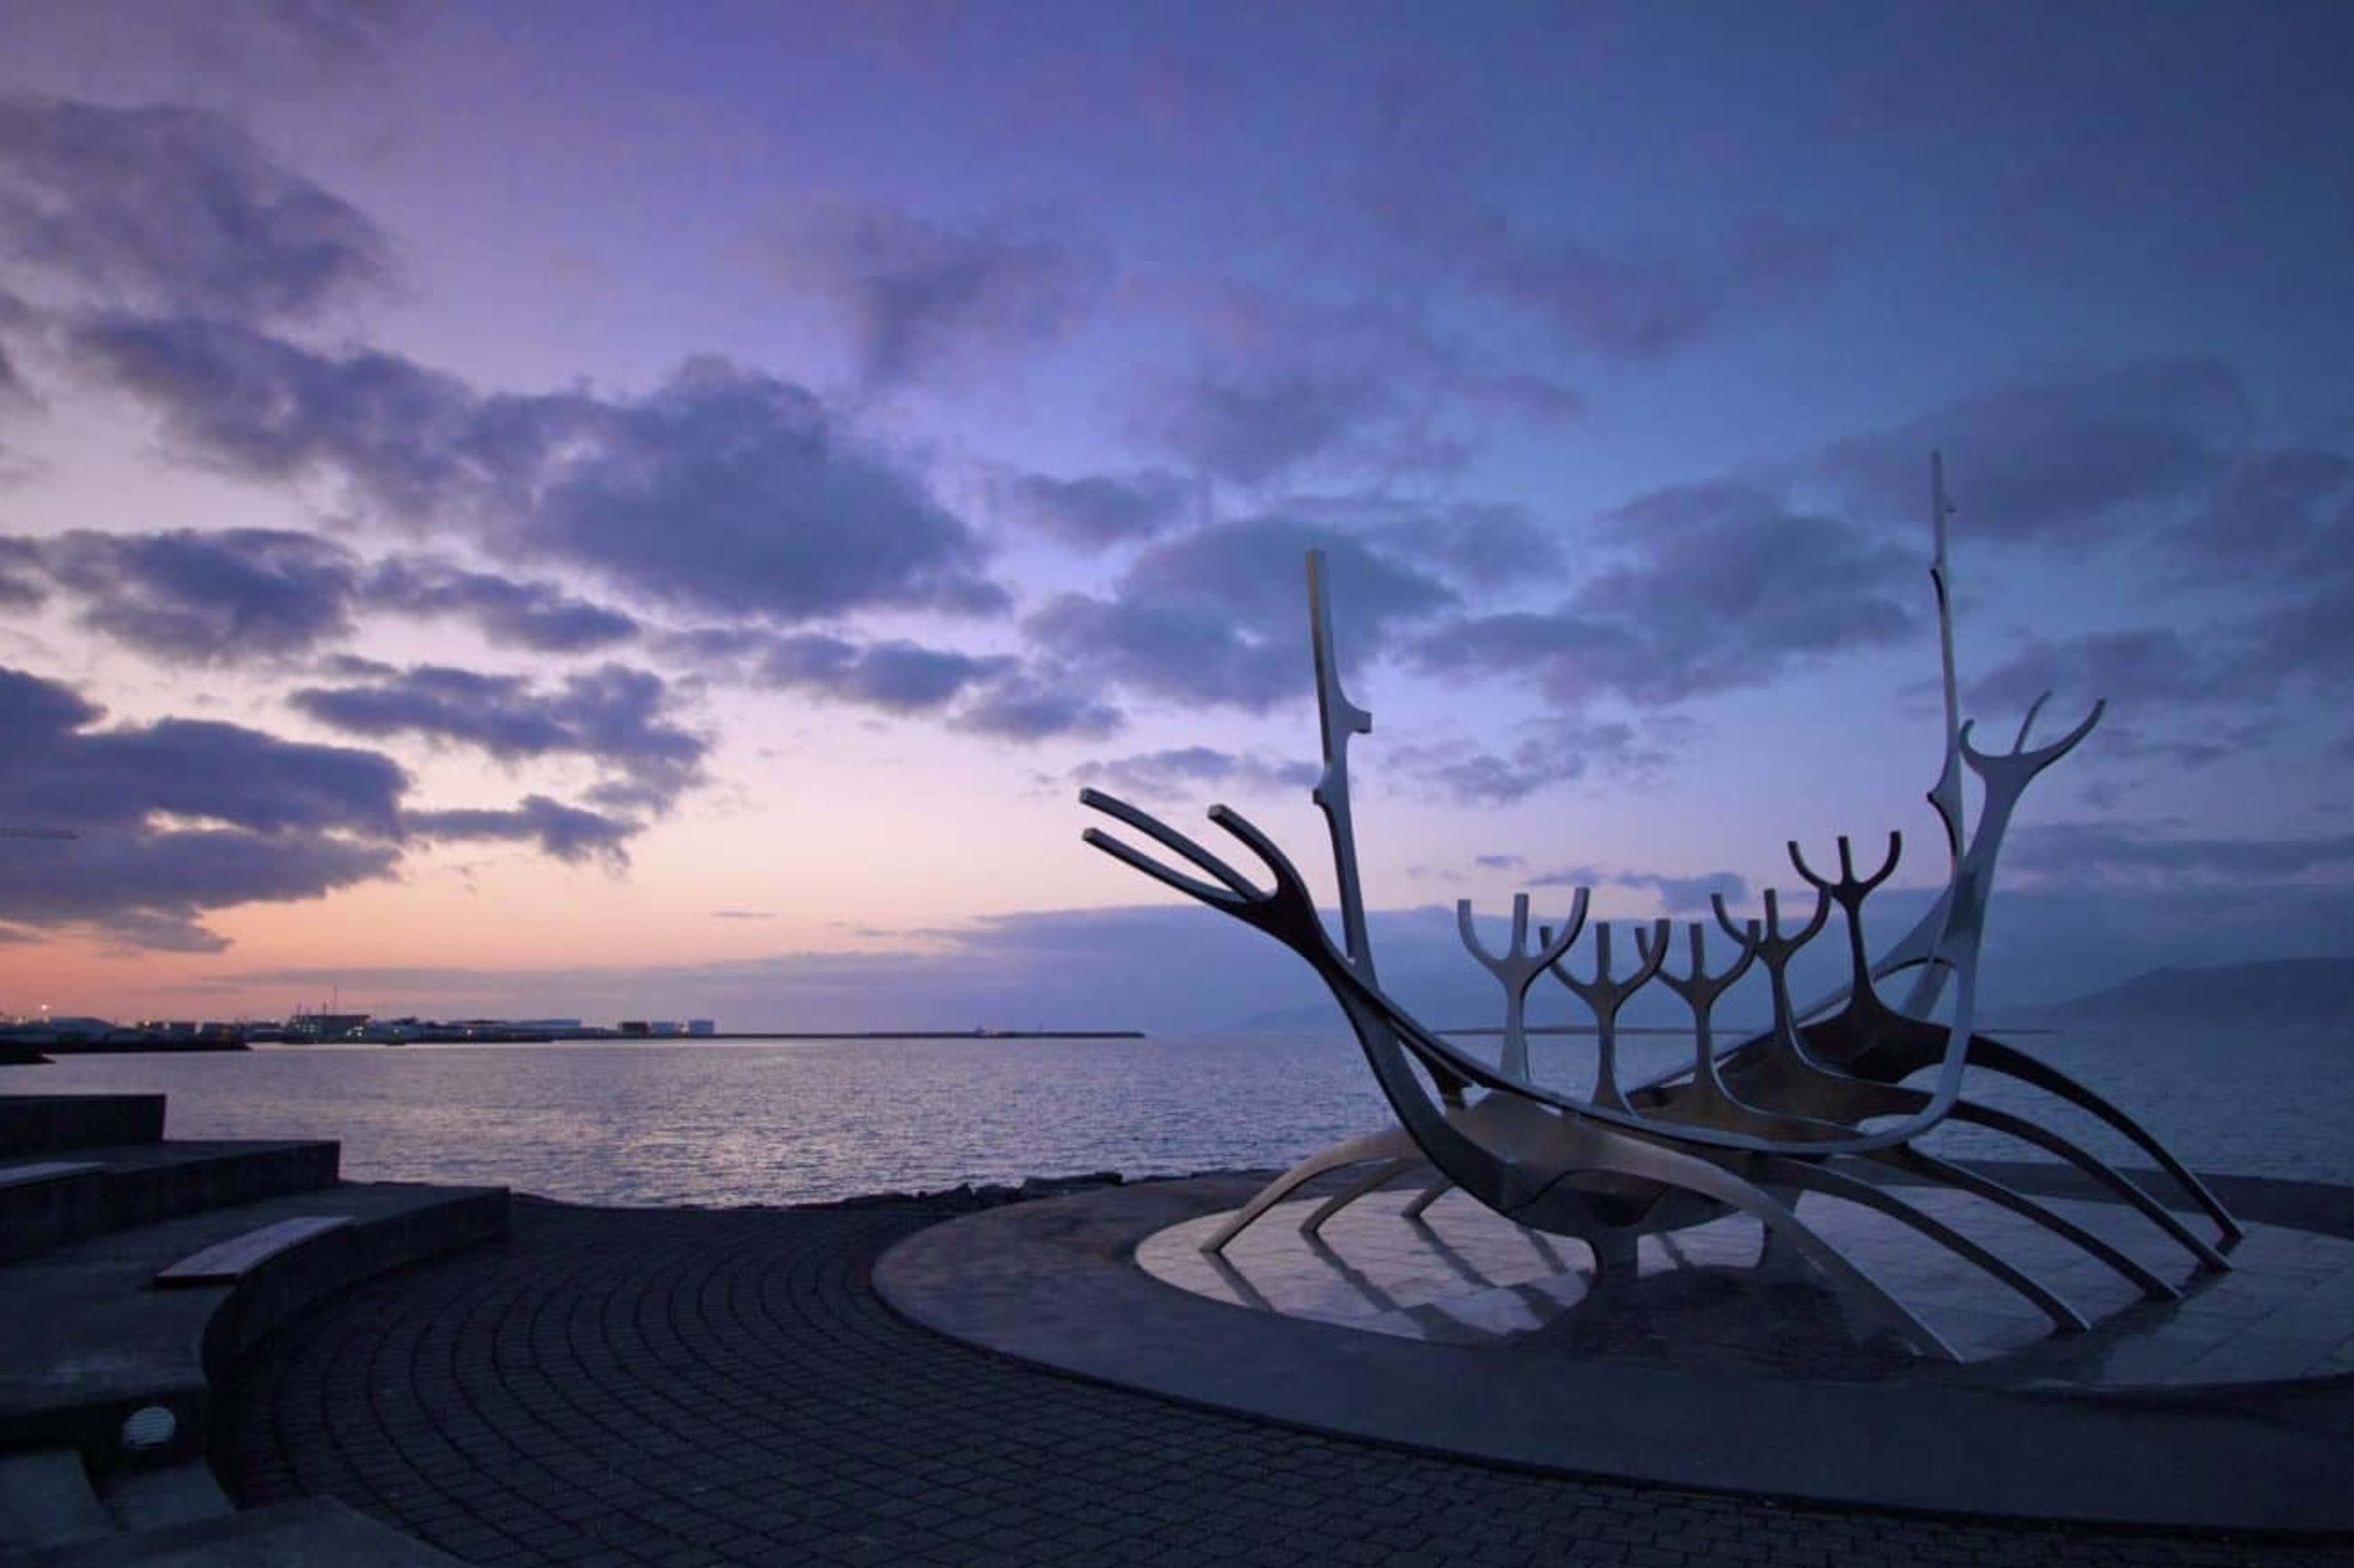 The Sun Voyager sculpture in Reykjavík